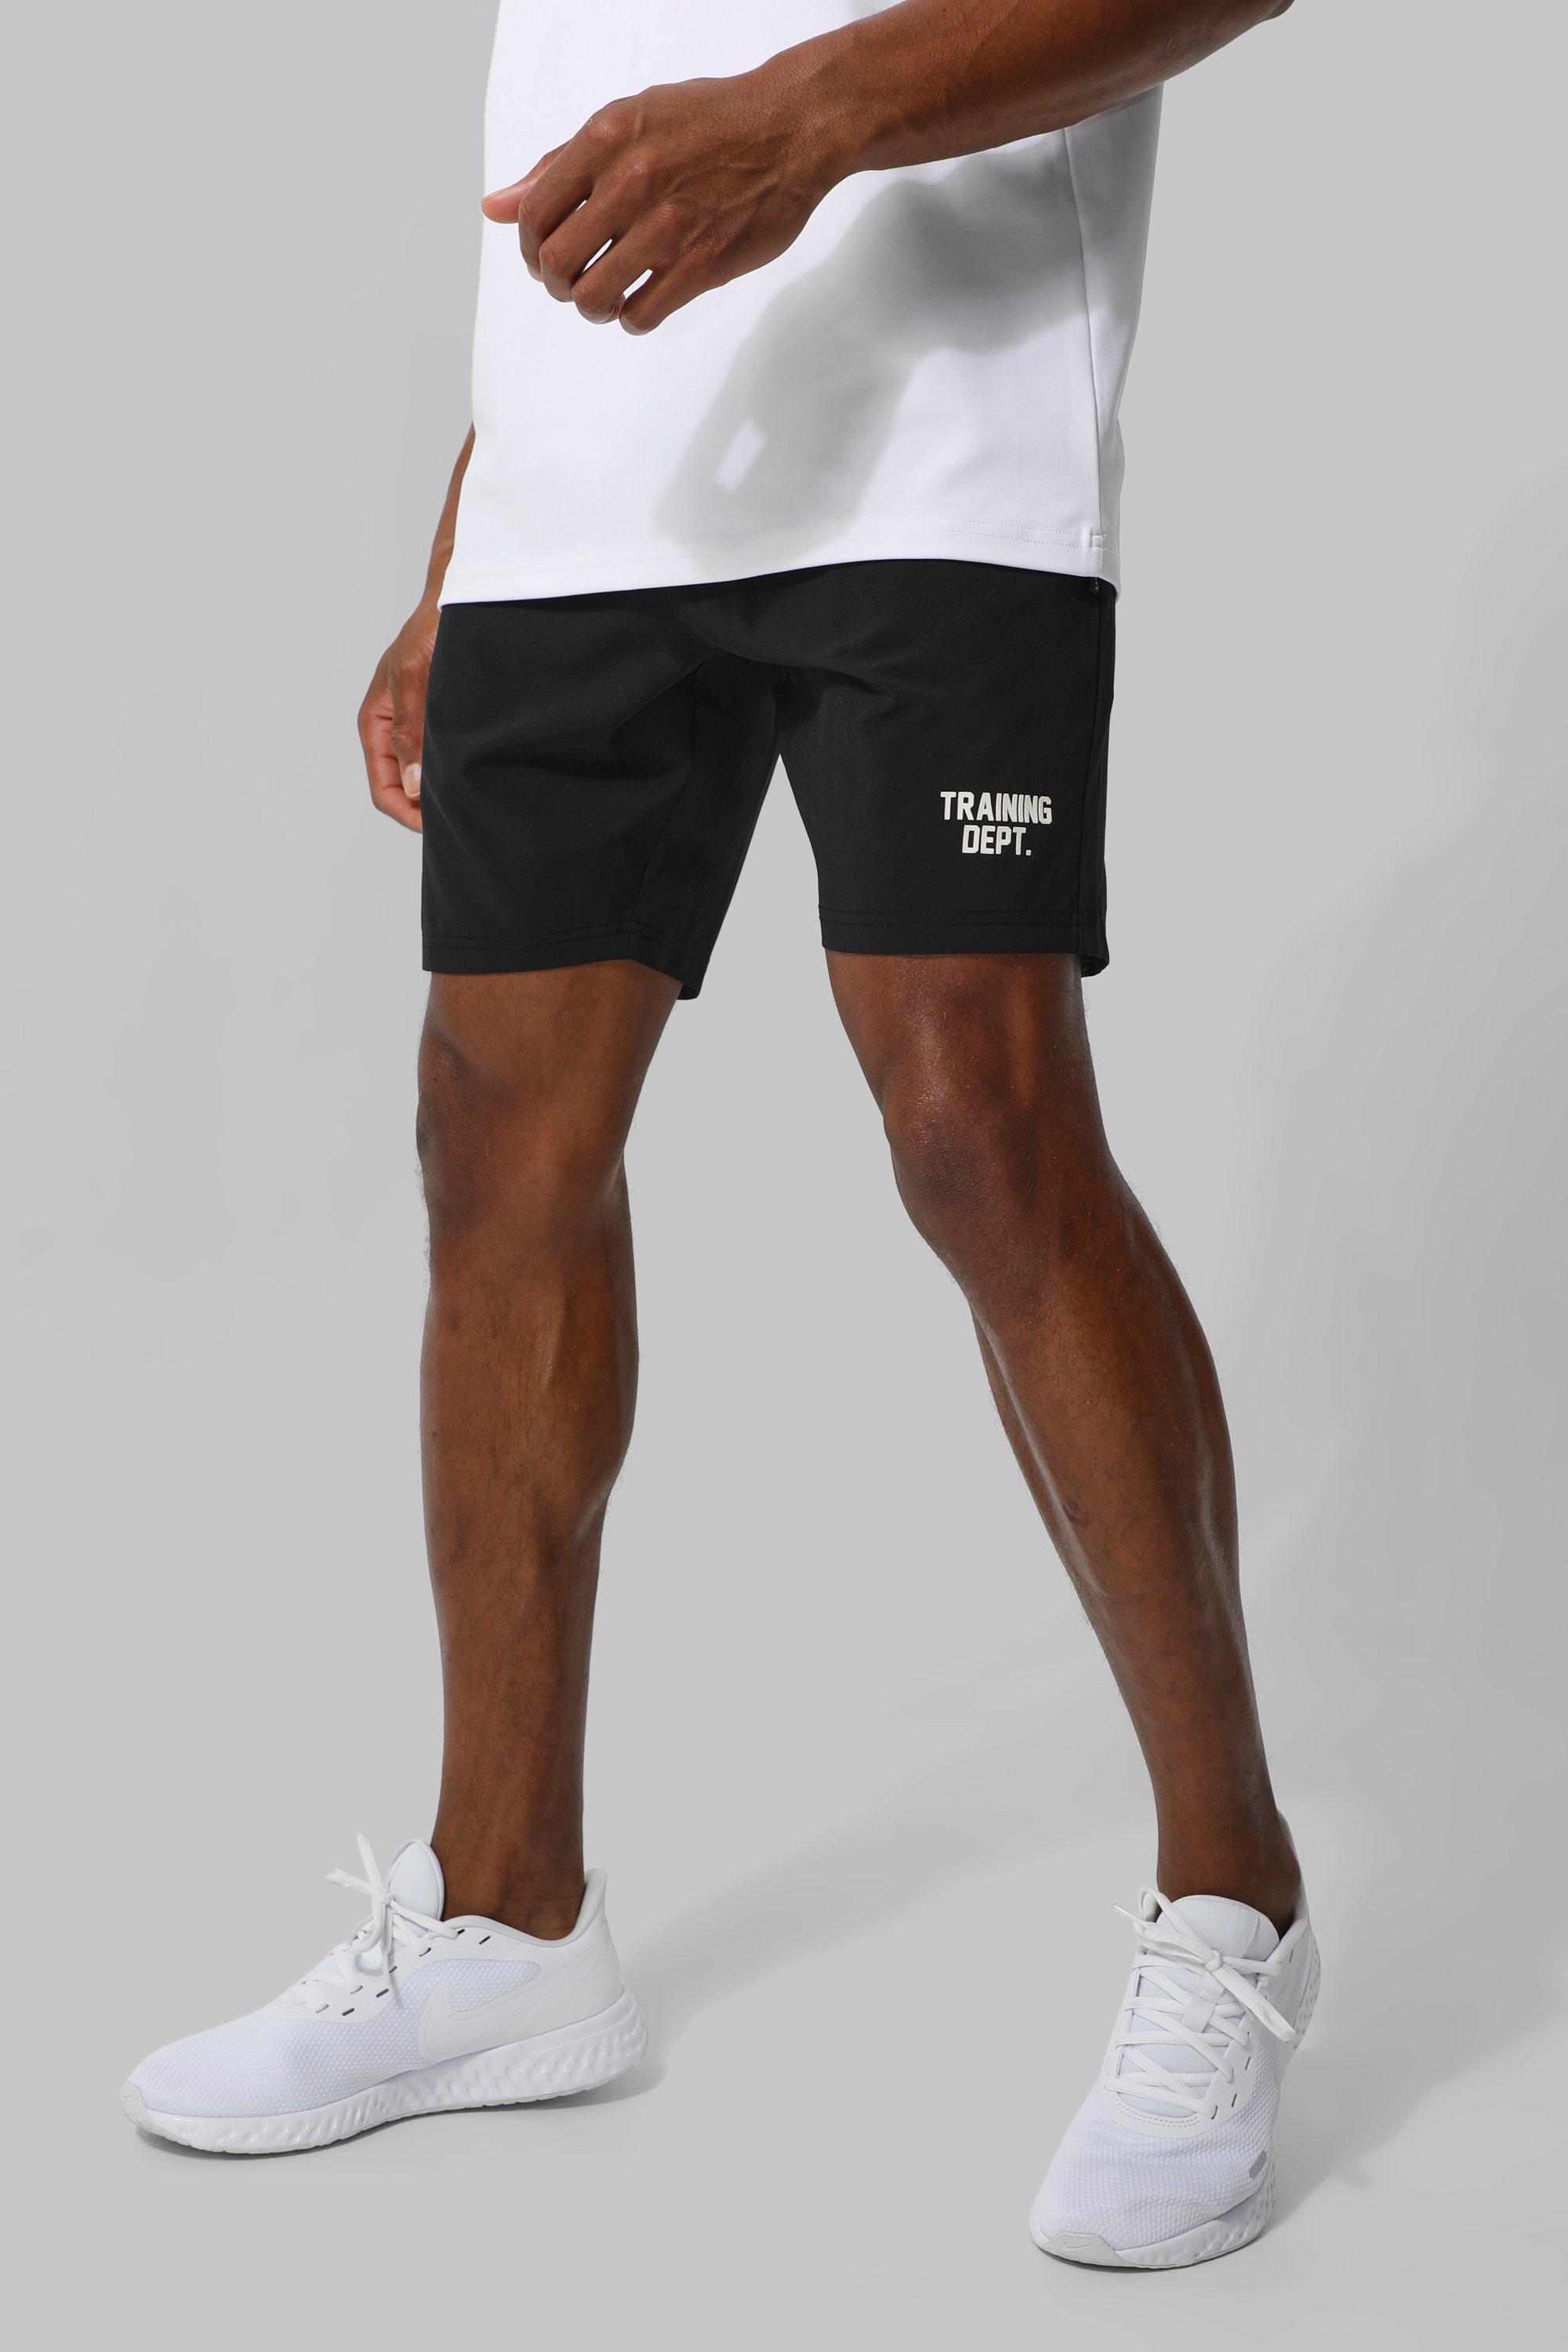 Mens Black Man Active Performance Training Dept 5inch Shorts, Black